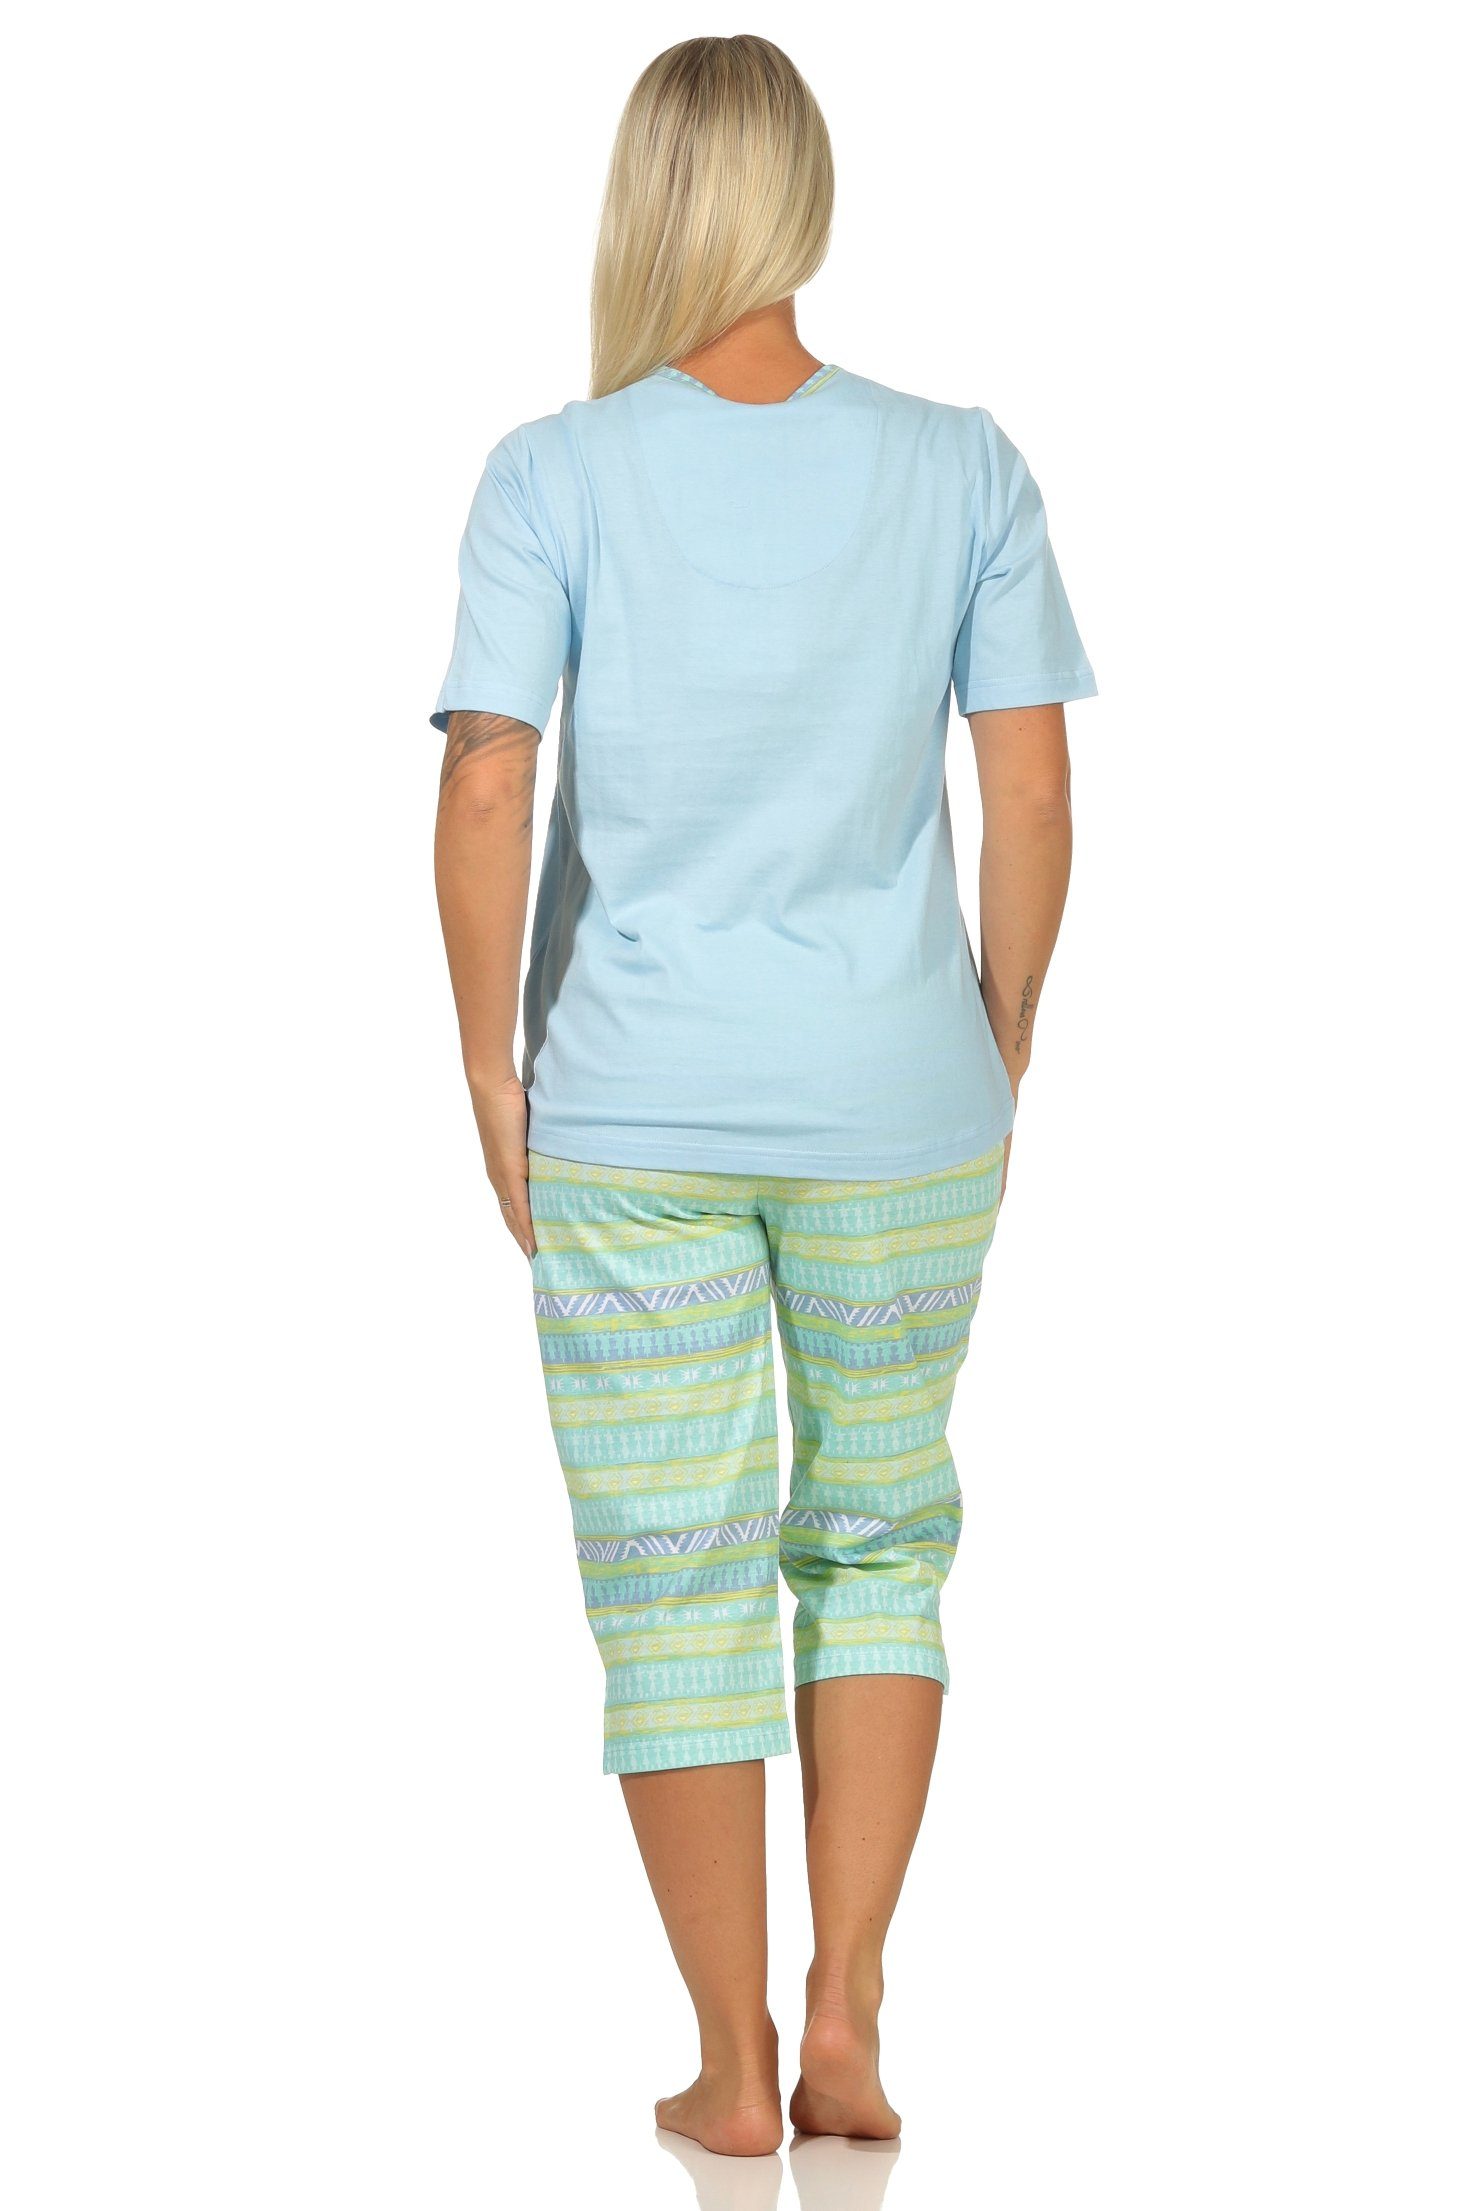 Pyjama mit Capri-Hose Normann Ethnolook Damen hellblau kurzarm im Schlafanzug Pyjama